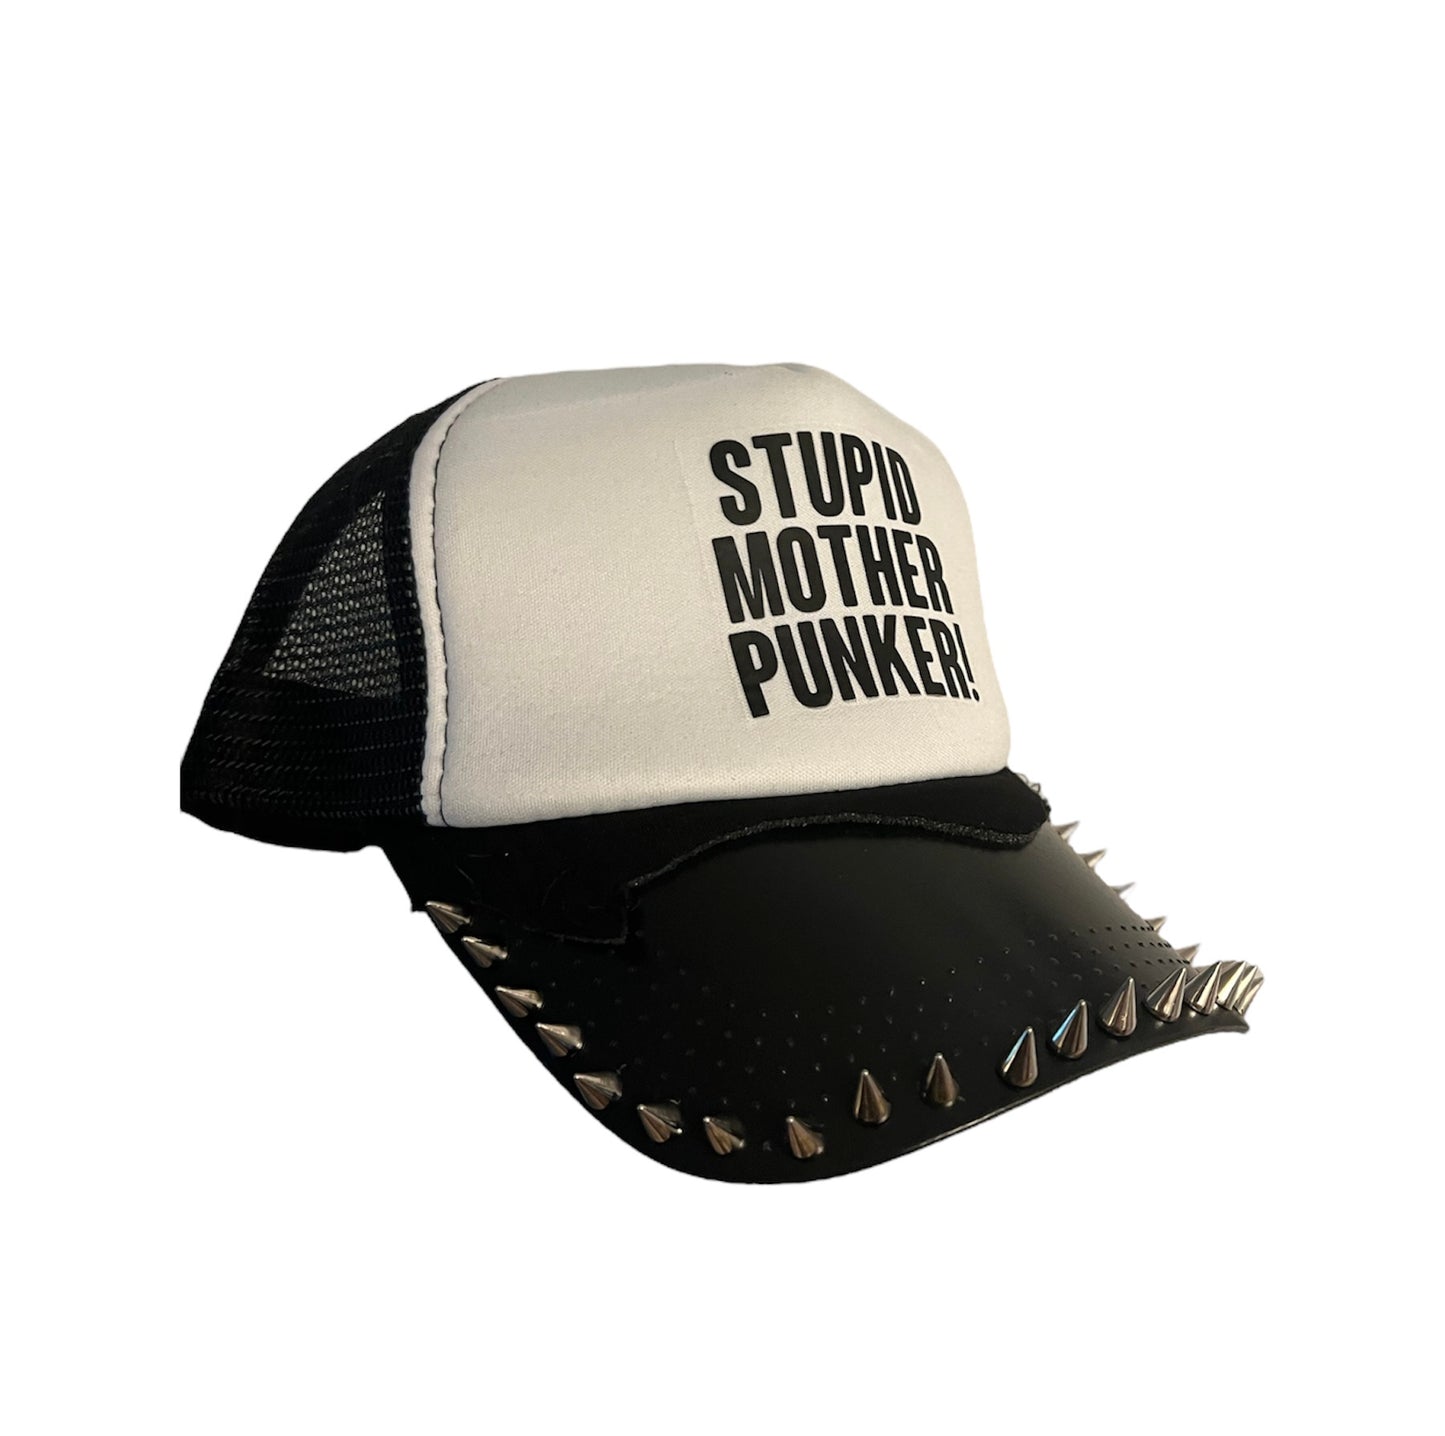 “Spiked” Stupid Mother Punker Trucker Hat